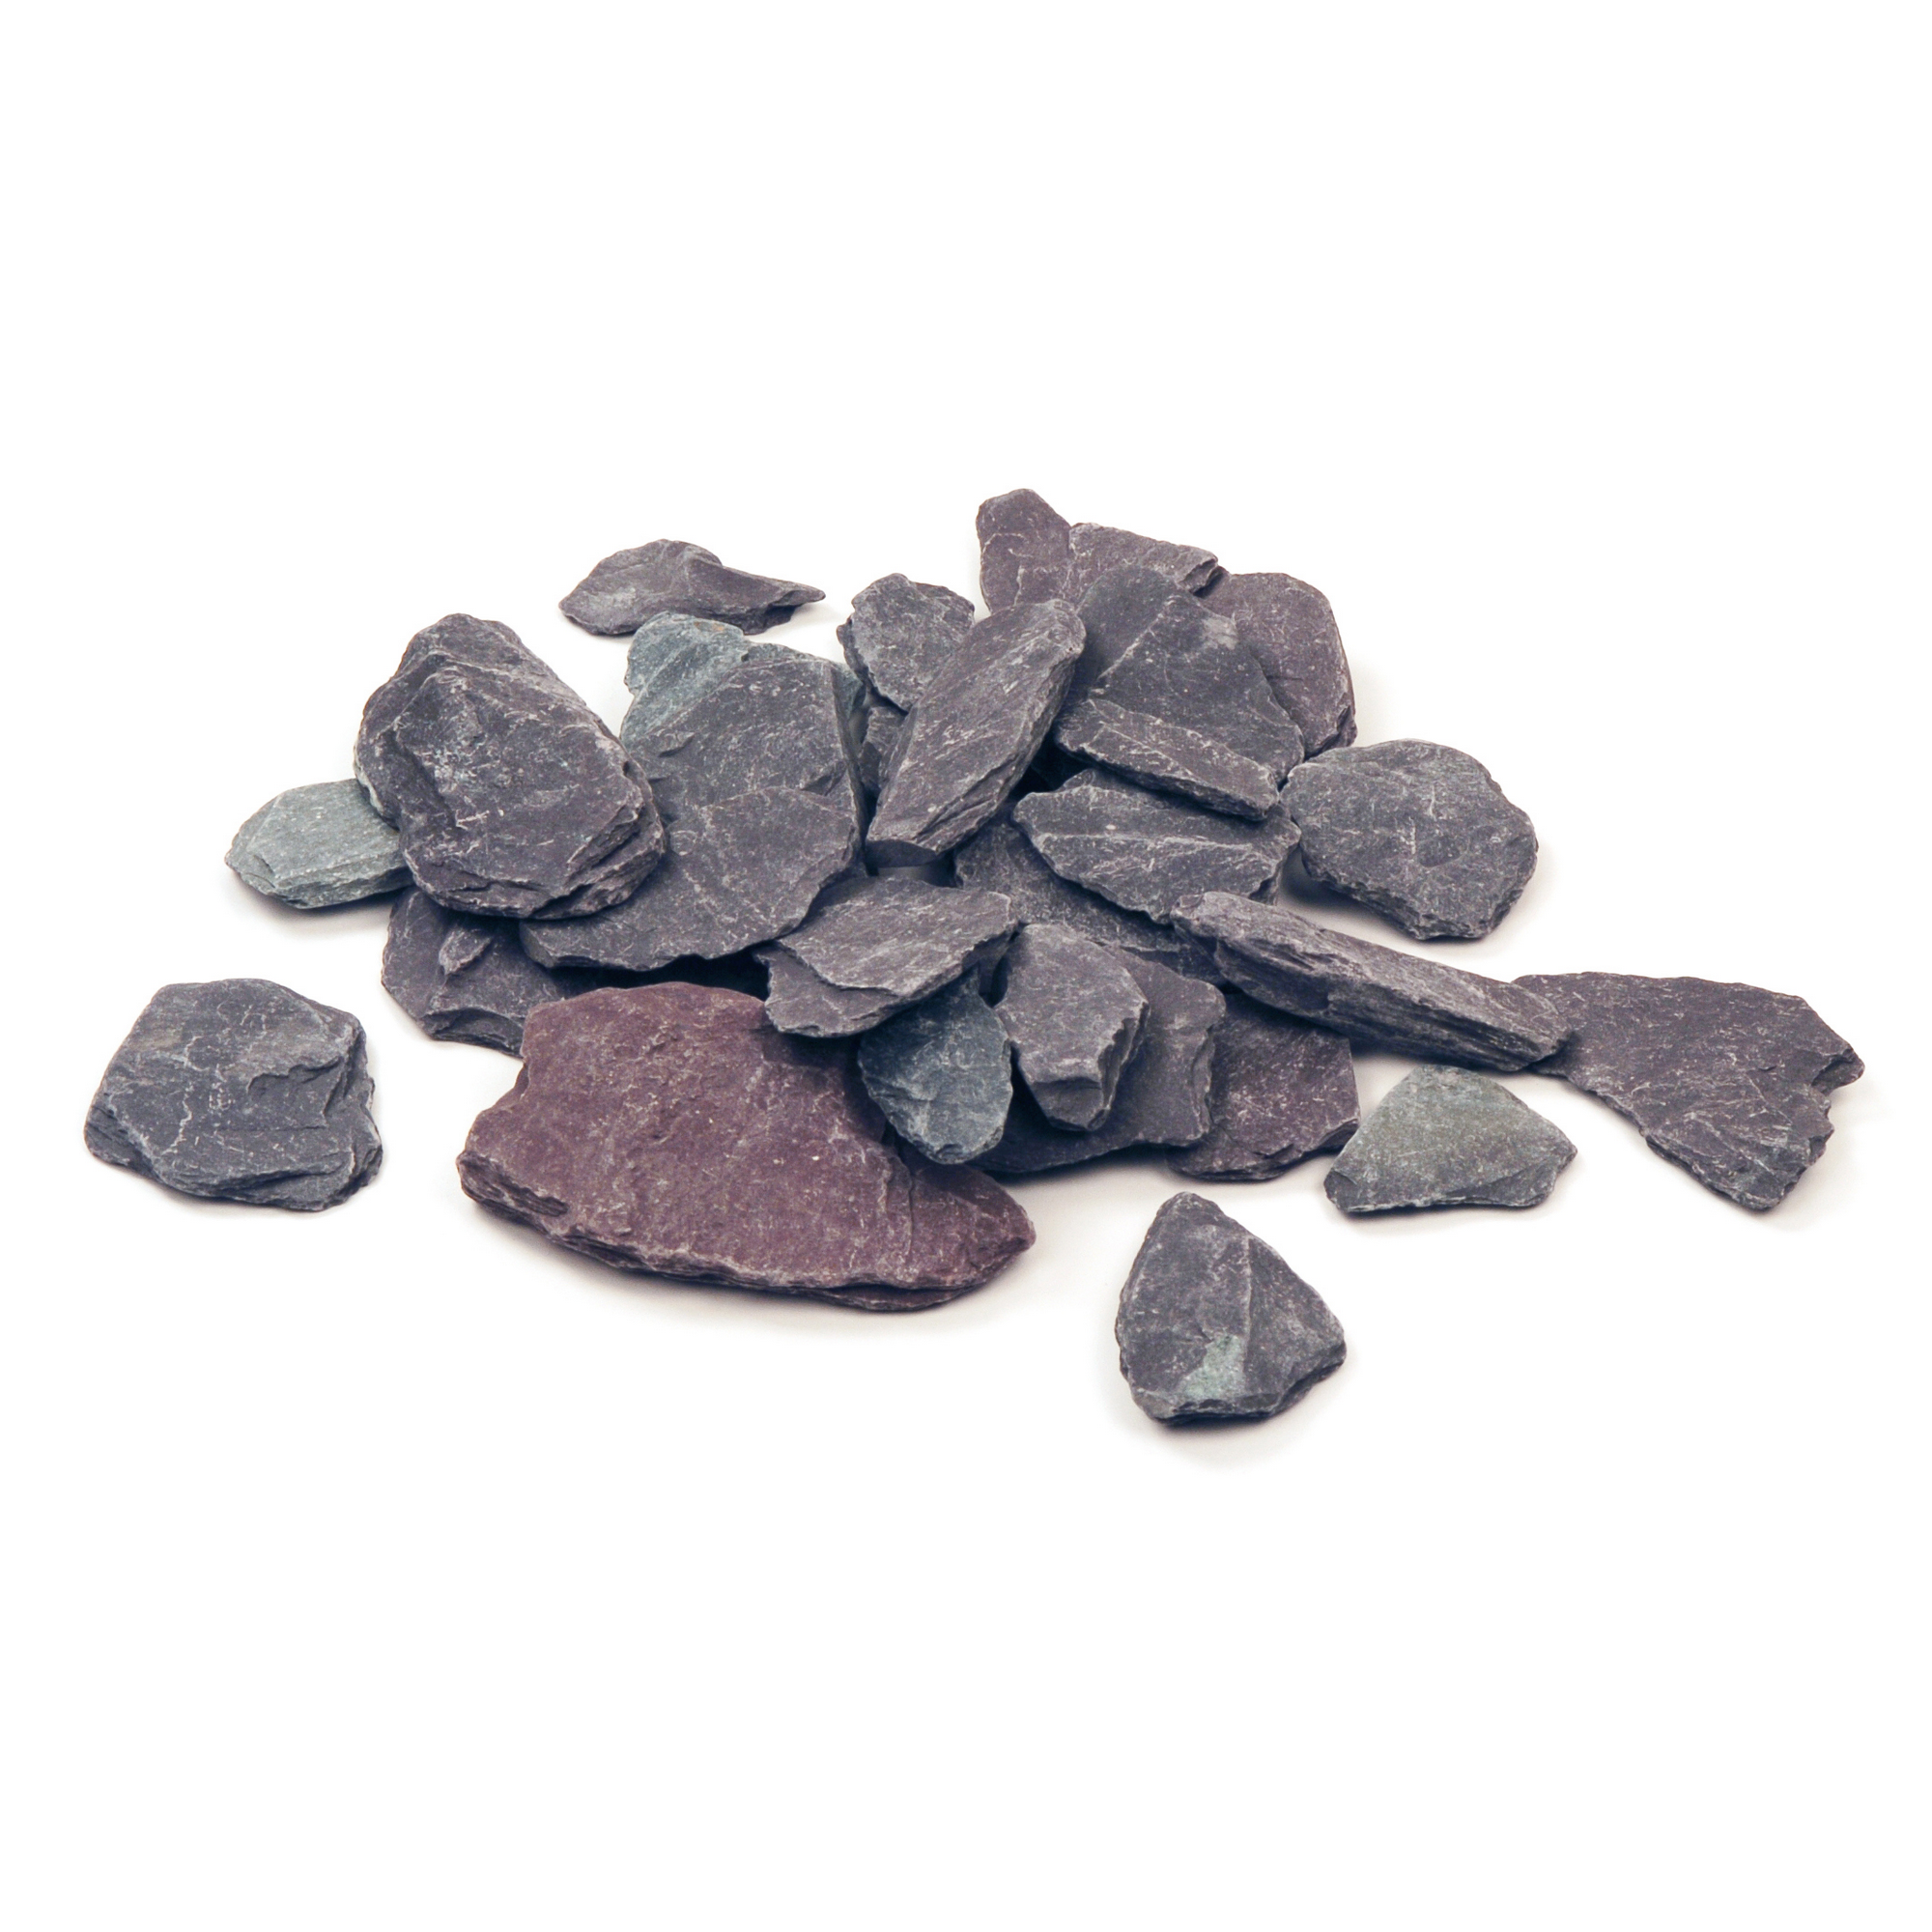 Zierkies 'Canadian Slate' violett 15/30 mm 500 kg im Big Bag + product picture